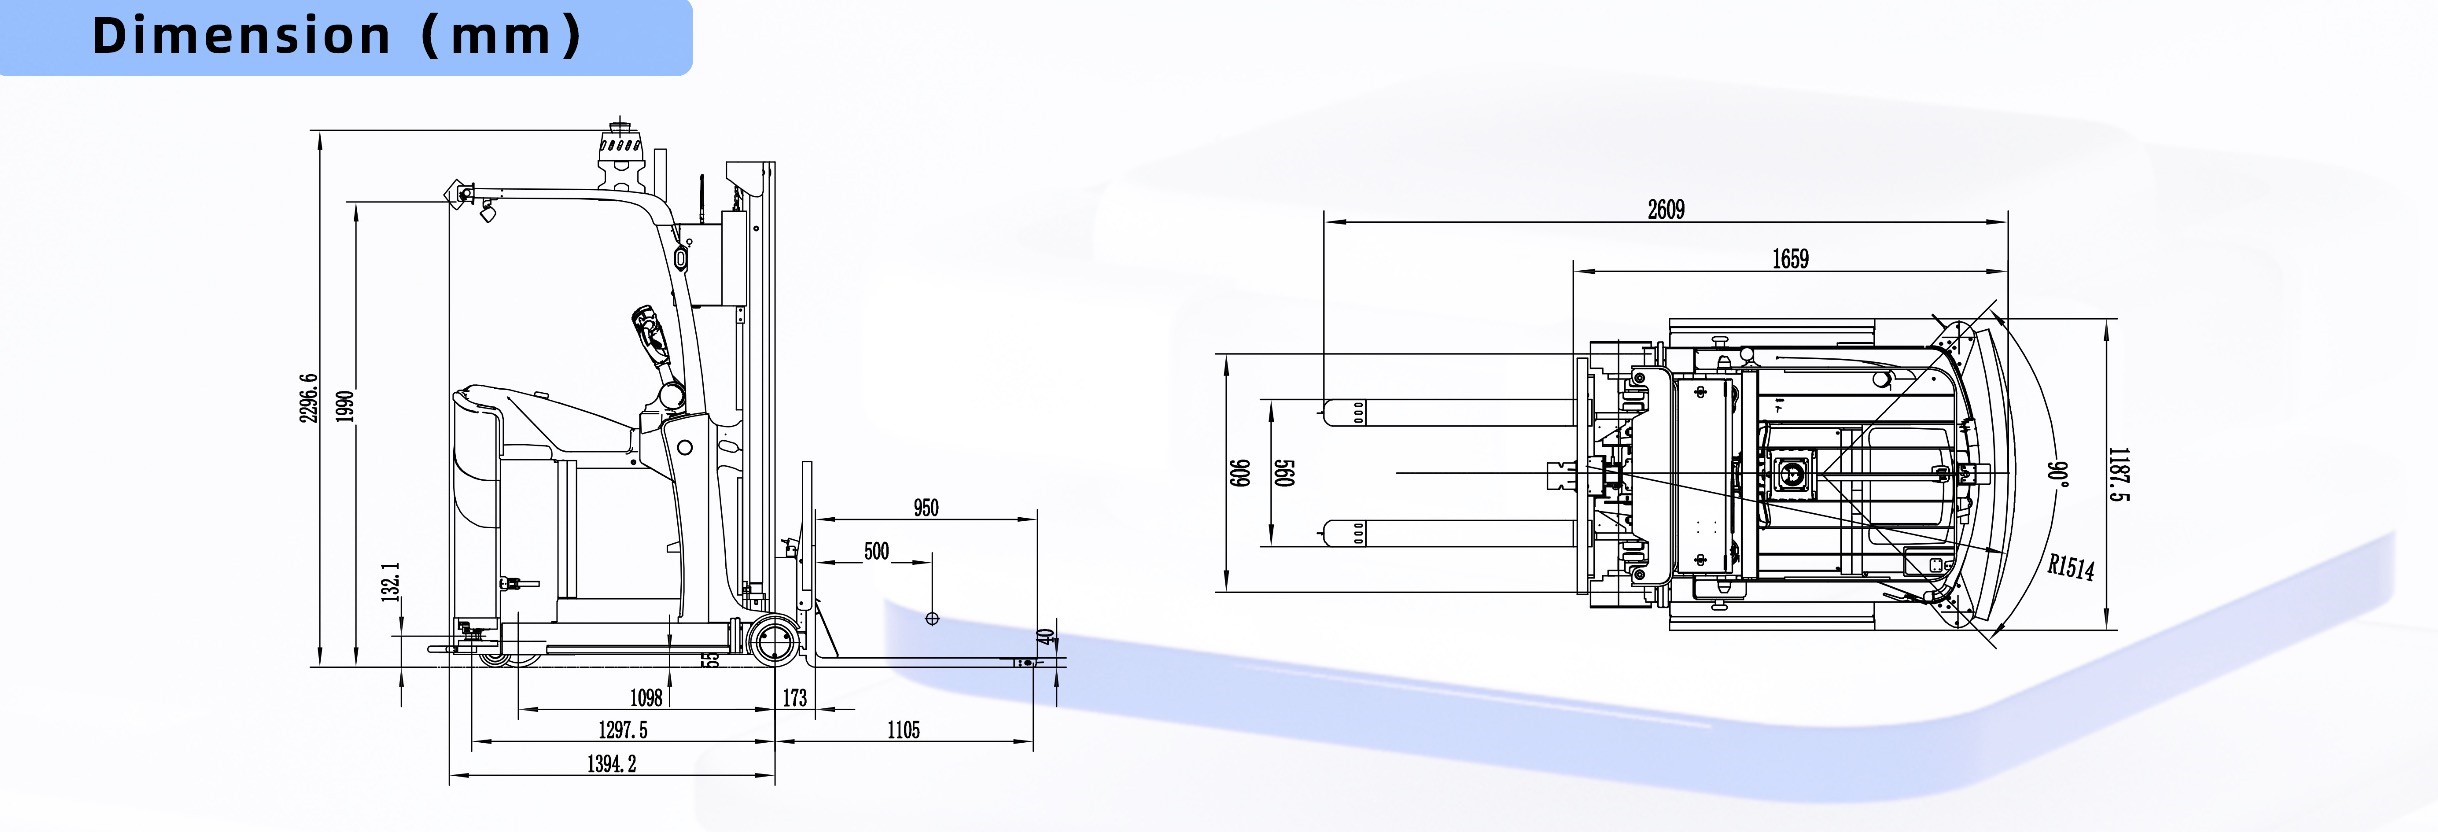 Dimension Parameter Specification SFL-CDD15-T Smart Forklift